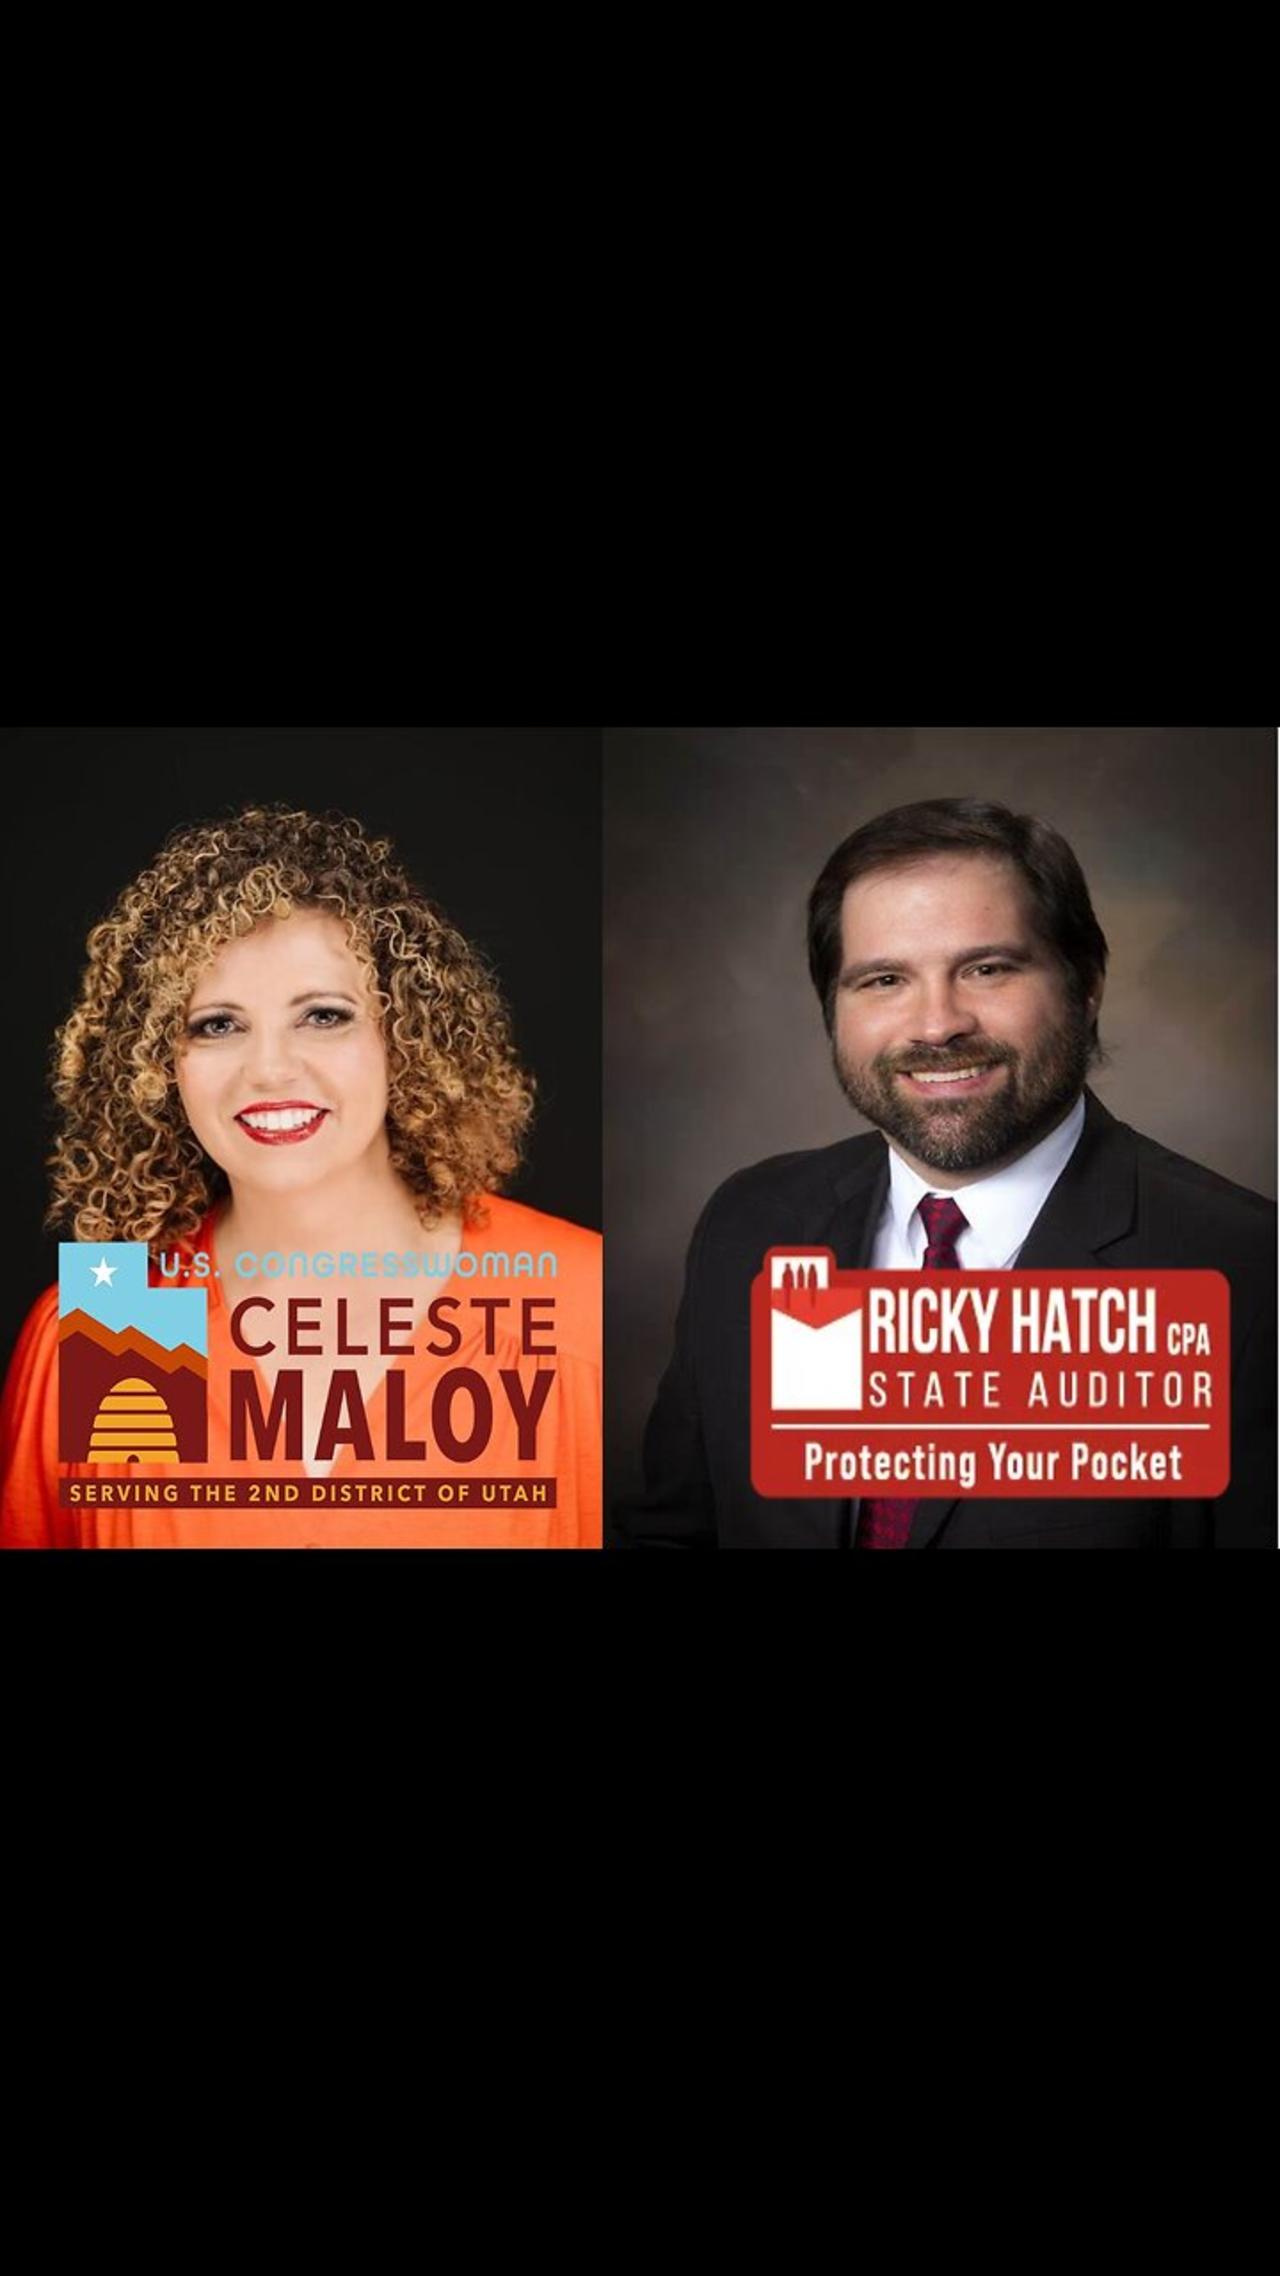 Congresswoman Celeste Maloy Then Ricky Hatch for State Auditor